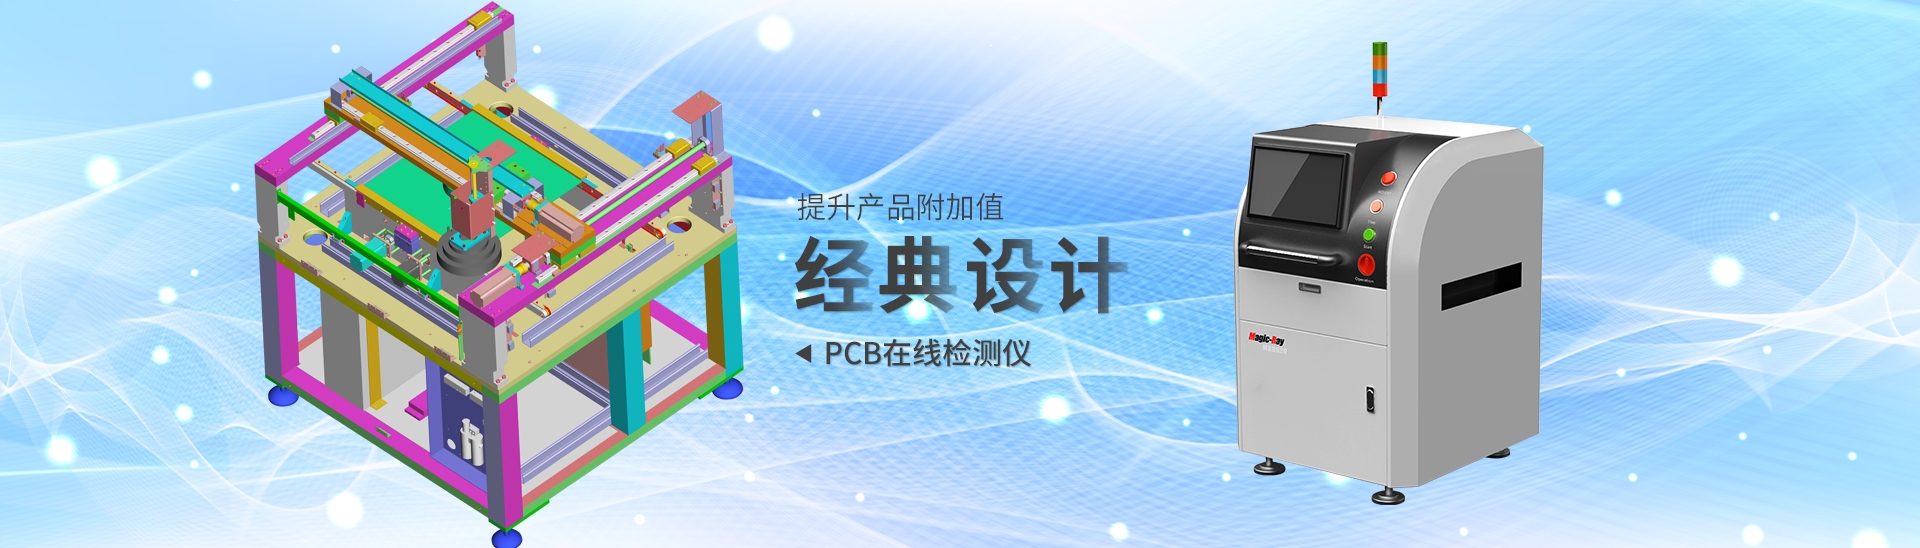 wangzhan-PCB在线检测仪